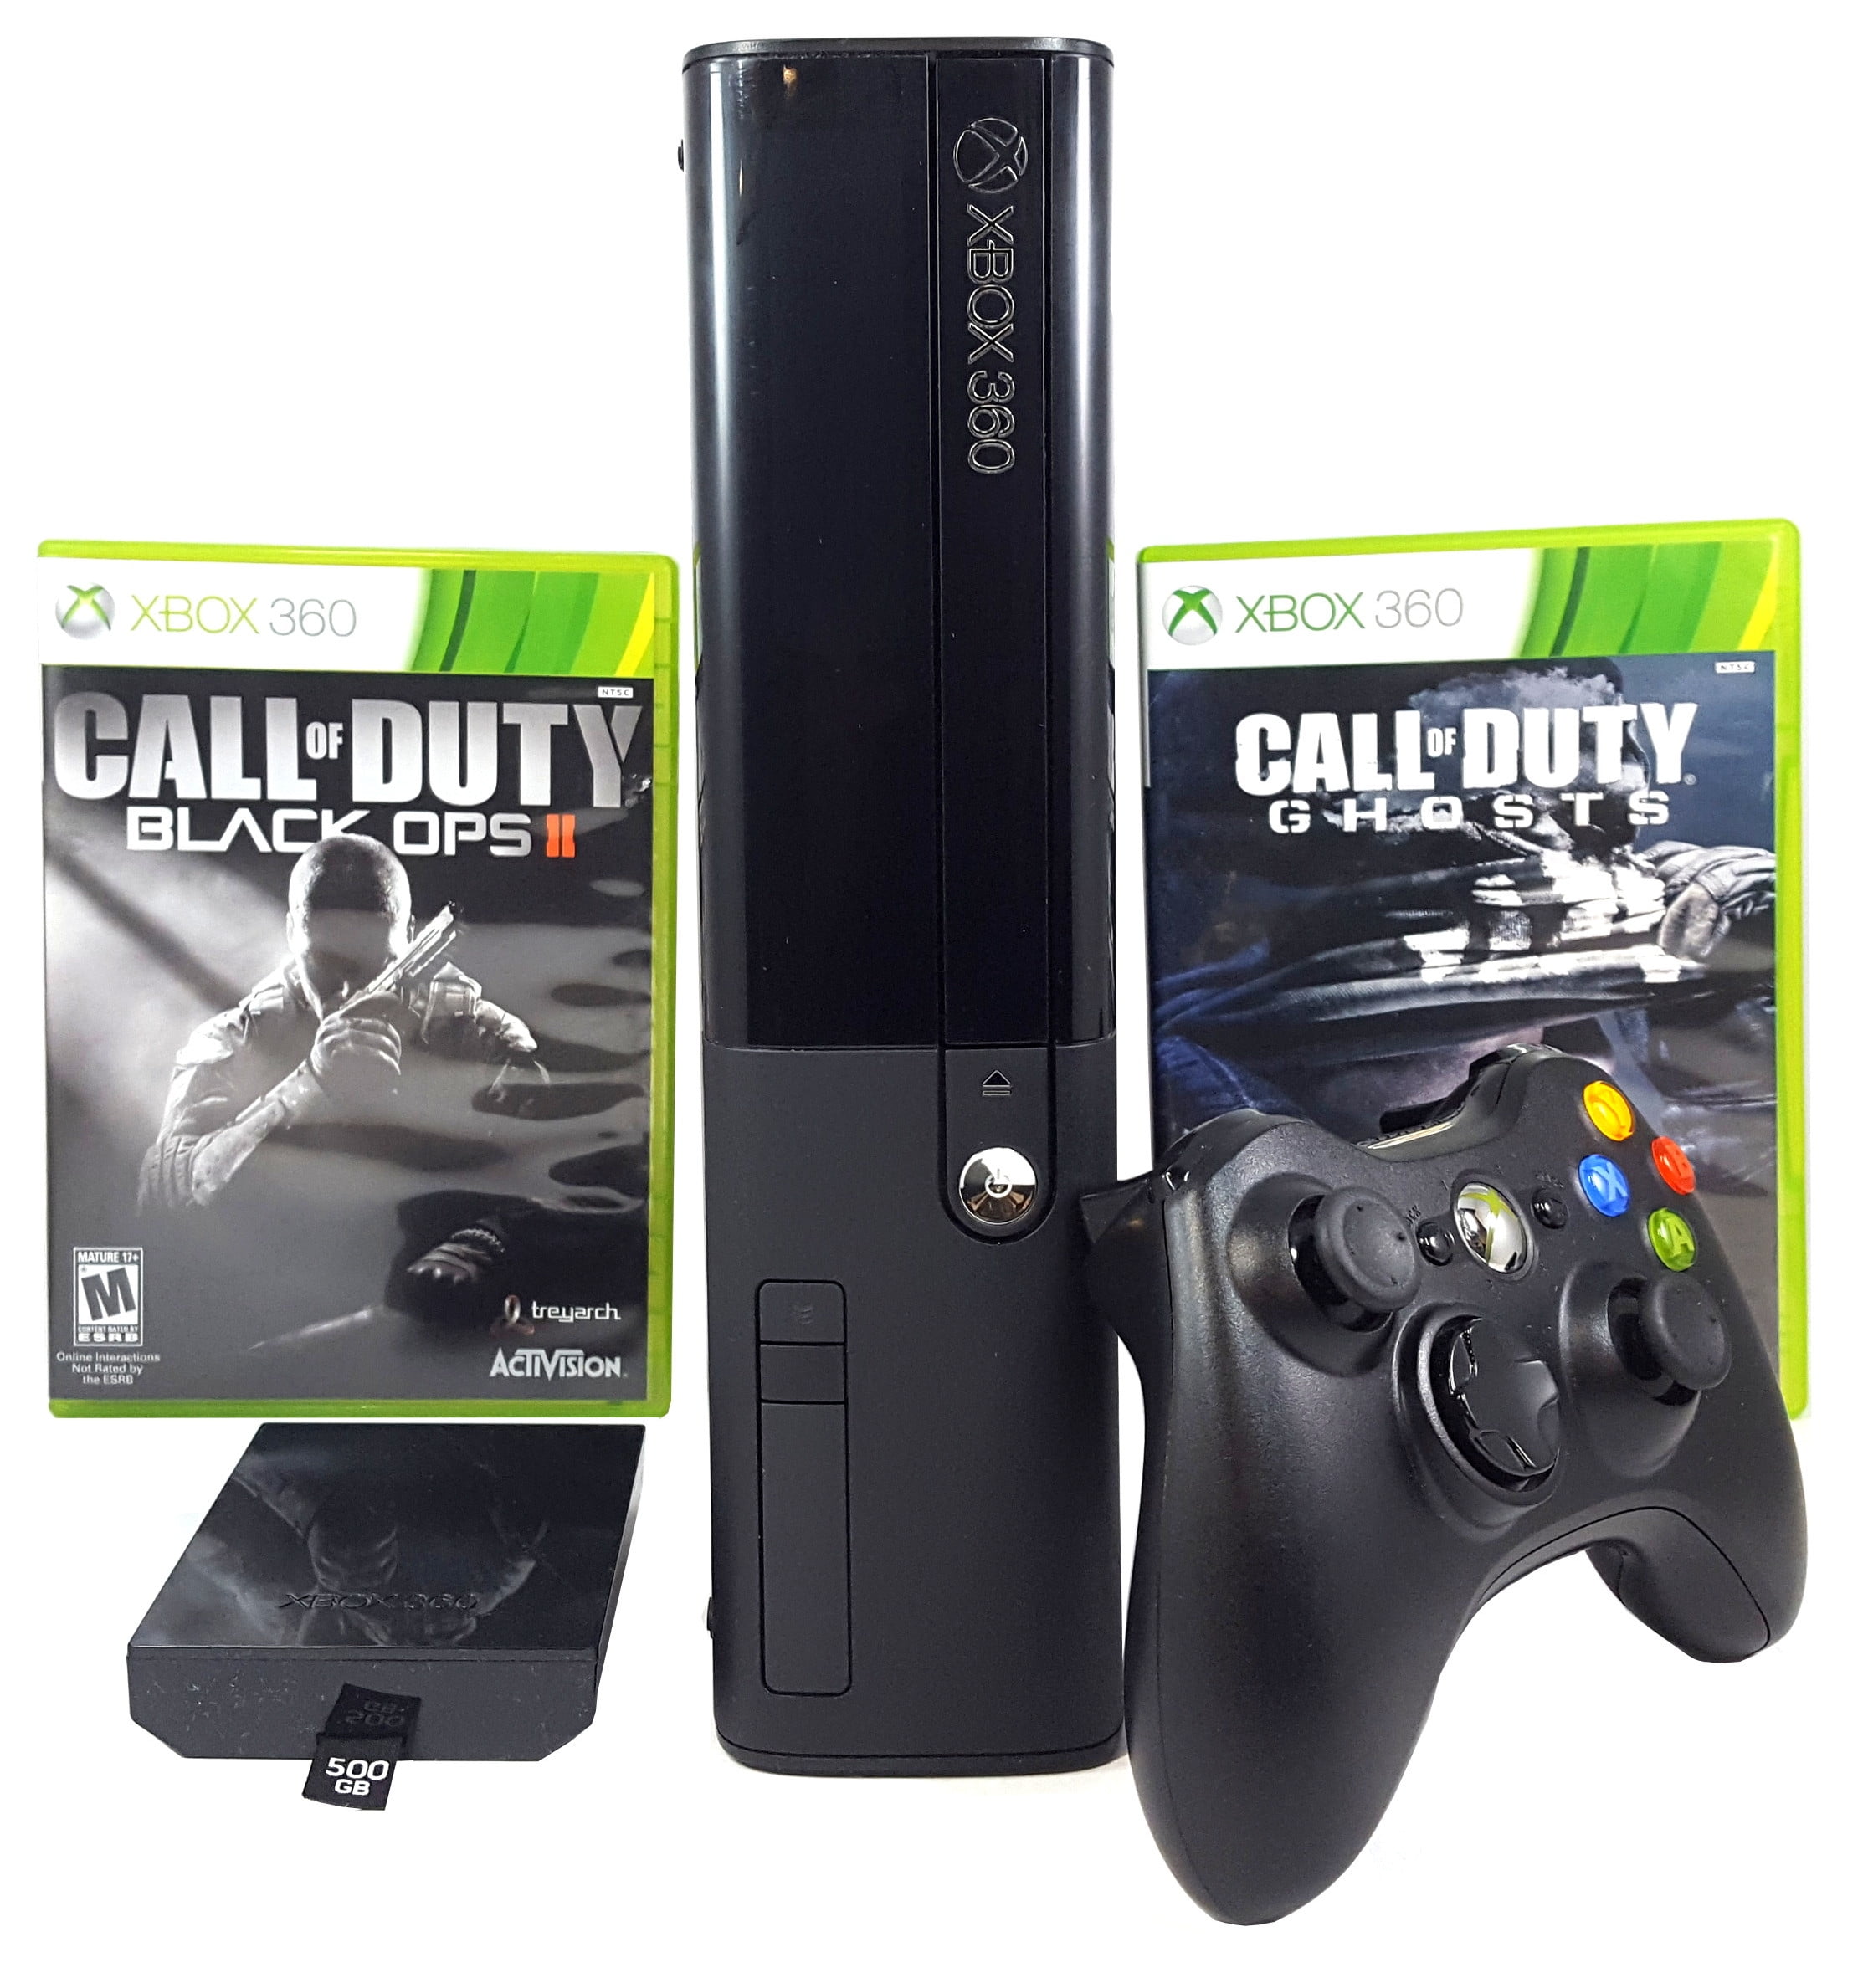 Call of Duty: Ghosts (Xbox 360) - Full Game 1080p60 HD Walkthrough